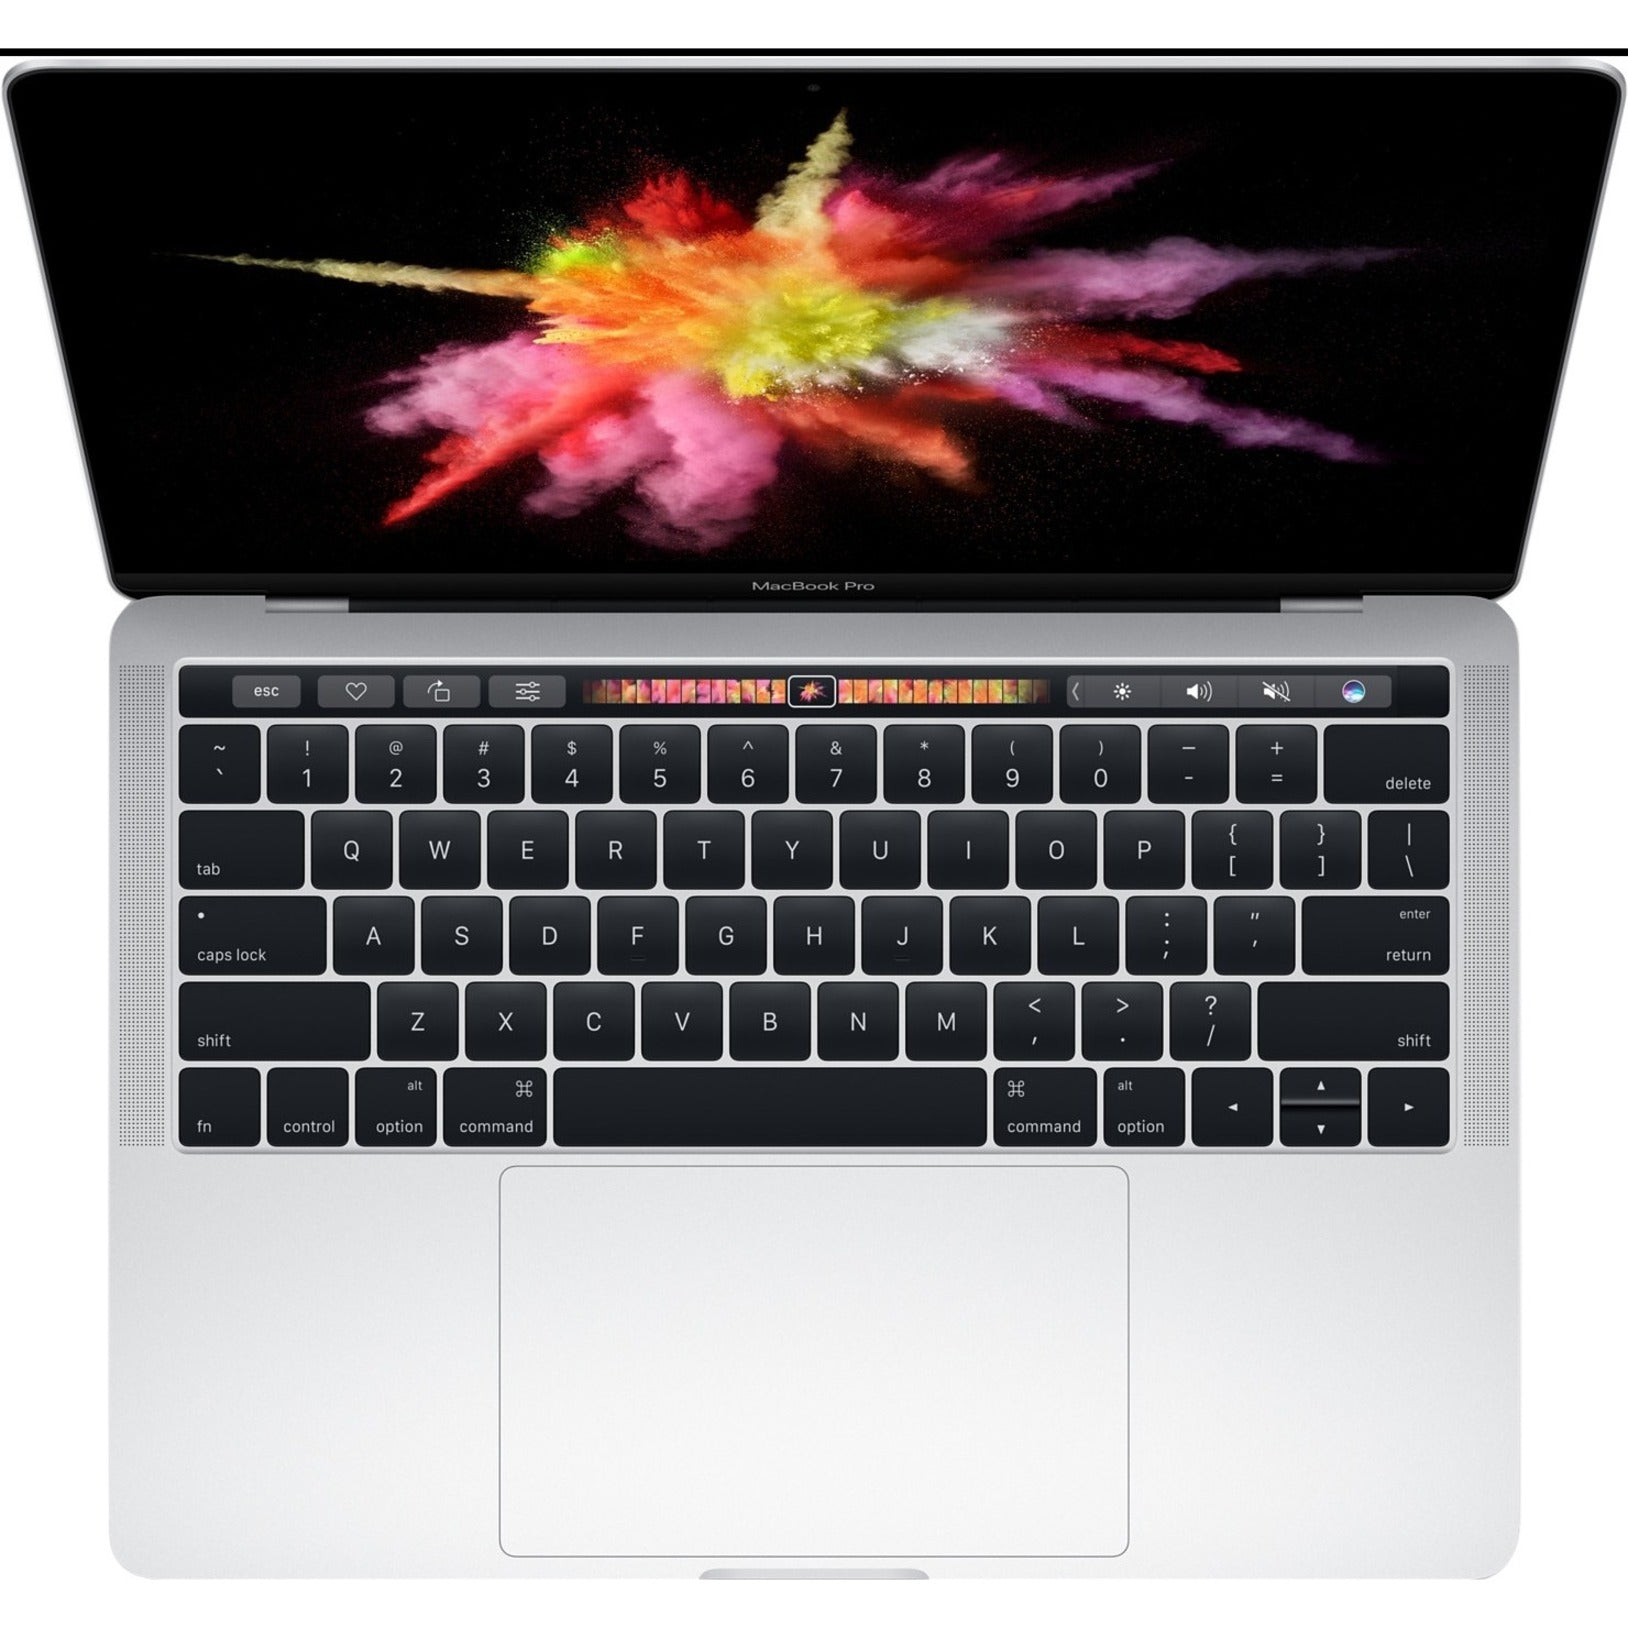 Apple MNQG2LL/A MacBook Pro 13-inch Silver, Core i5, 8GB RAM, 512GB SSD, Mac OS X 10.12 Sierra